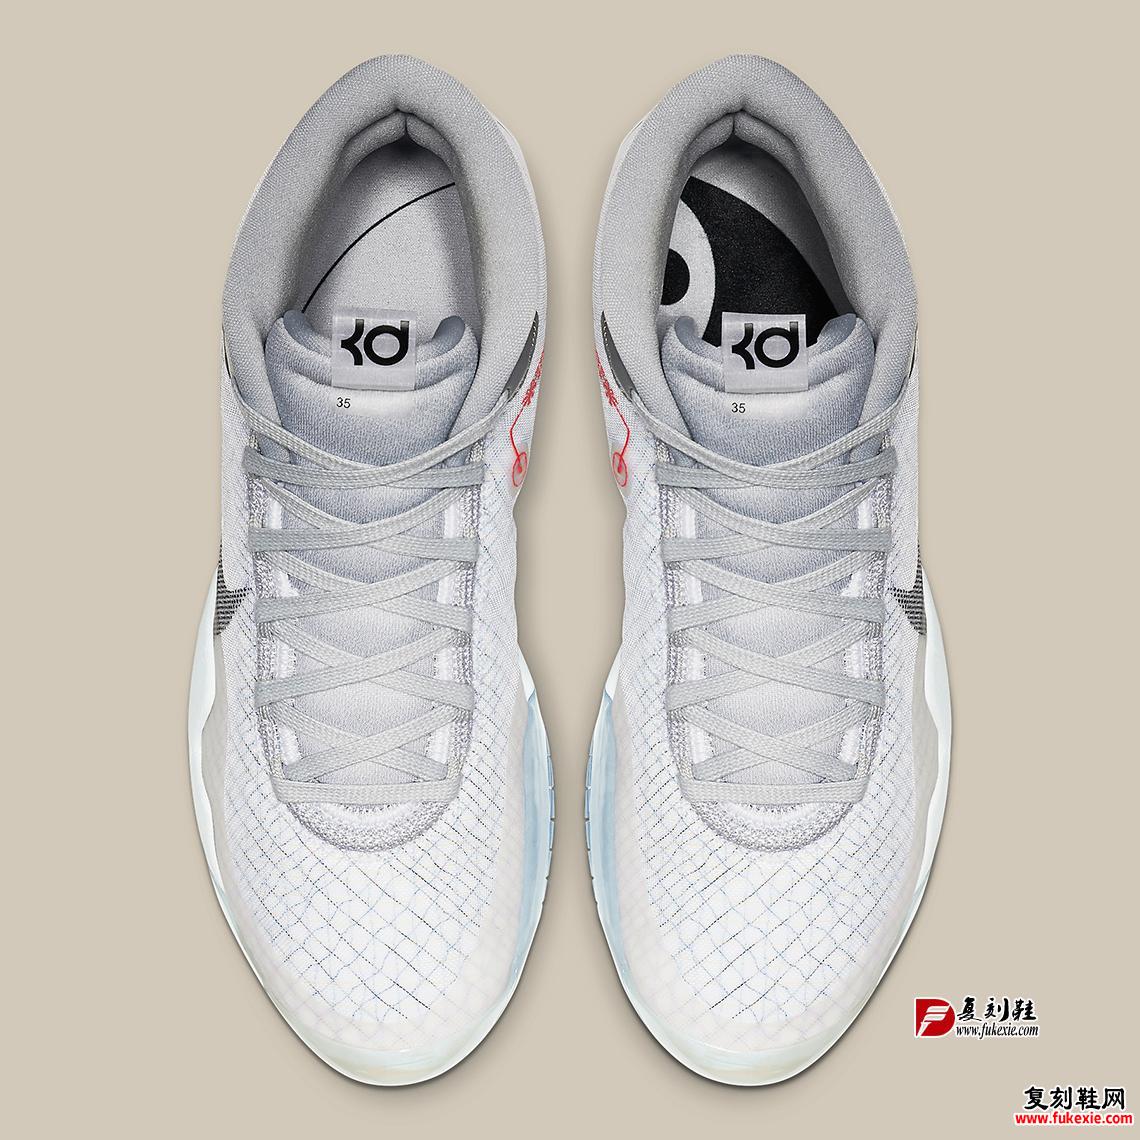 Nike,KD12,CK1197-101,发售  清爽简约的大众配色！全新 Nike KD 12 即将发售 复刻鞋网 fukexie.com